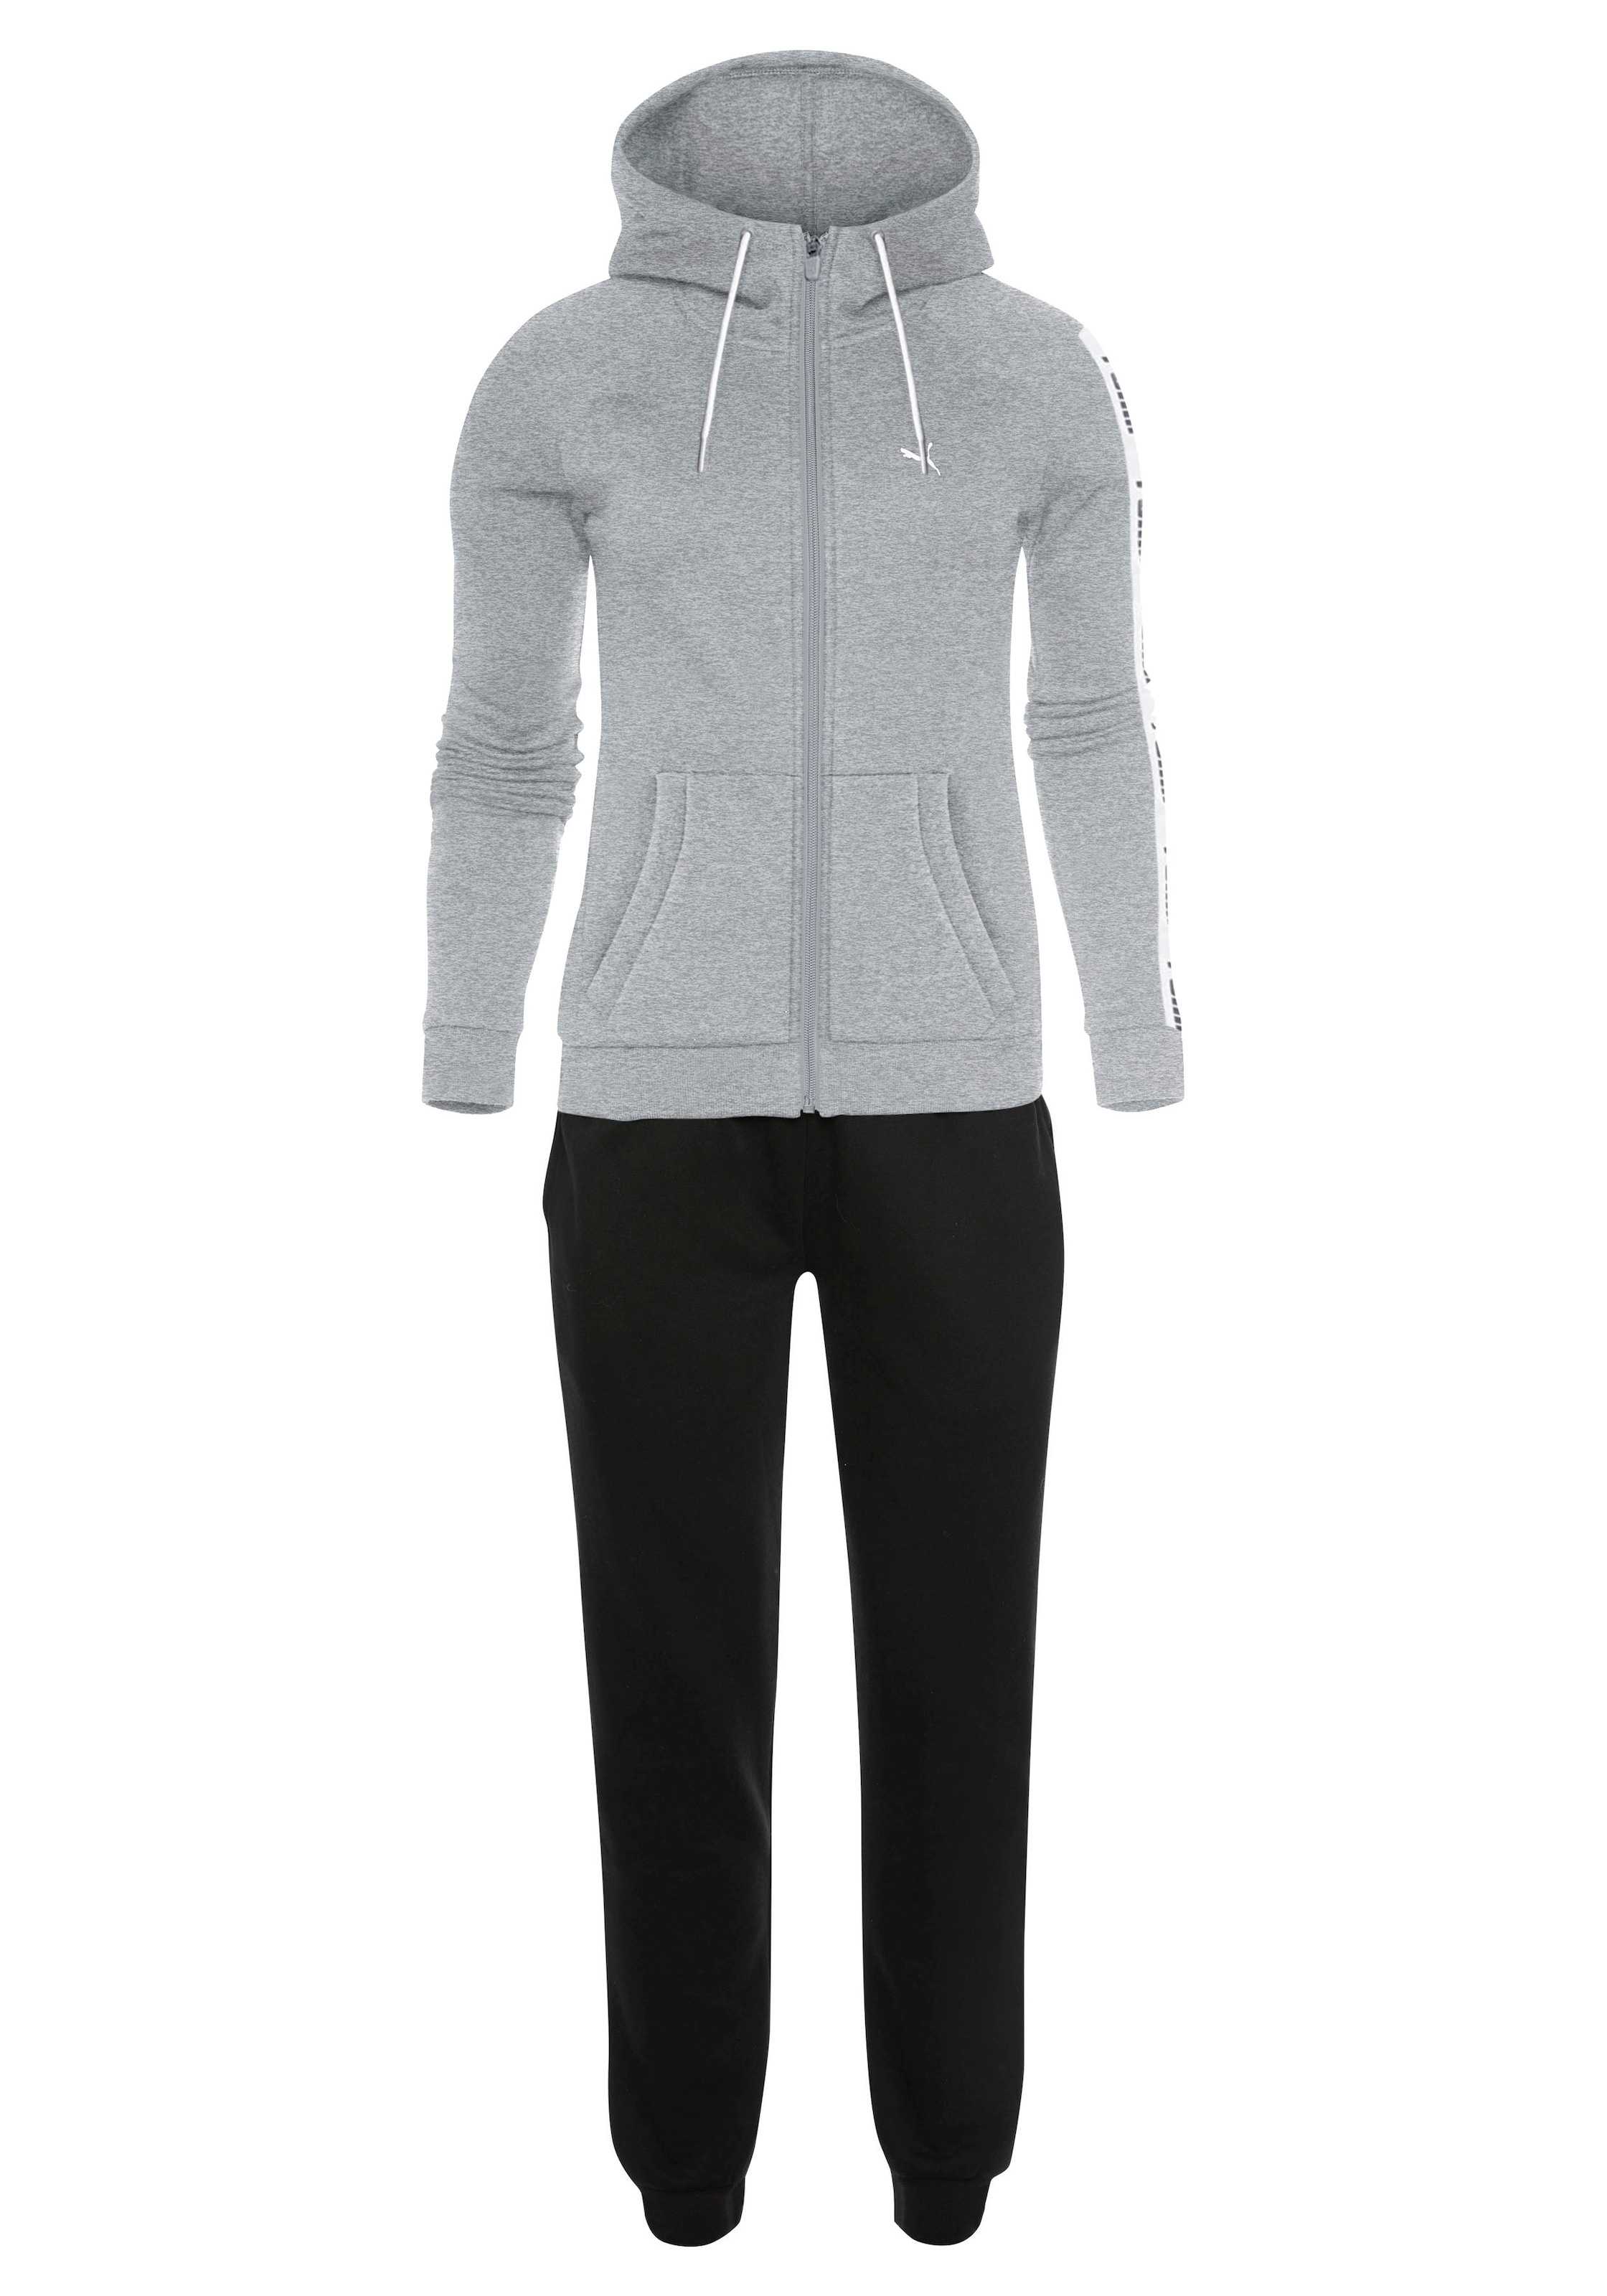 PUMA Jogginganzug »Ws 2 Full-Zip (Set, tlg.) OTTO Suit«, bestellen bei